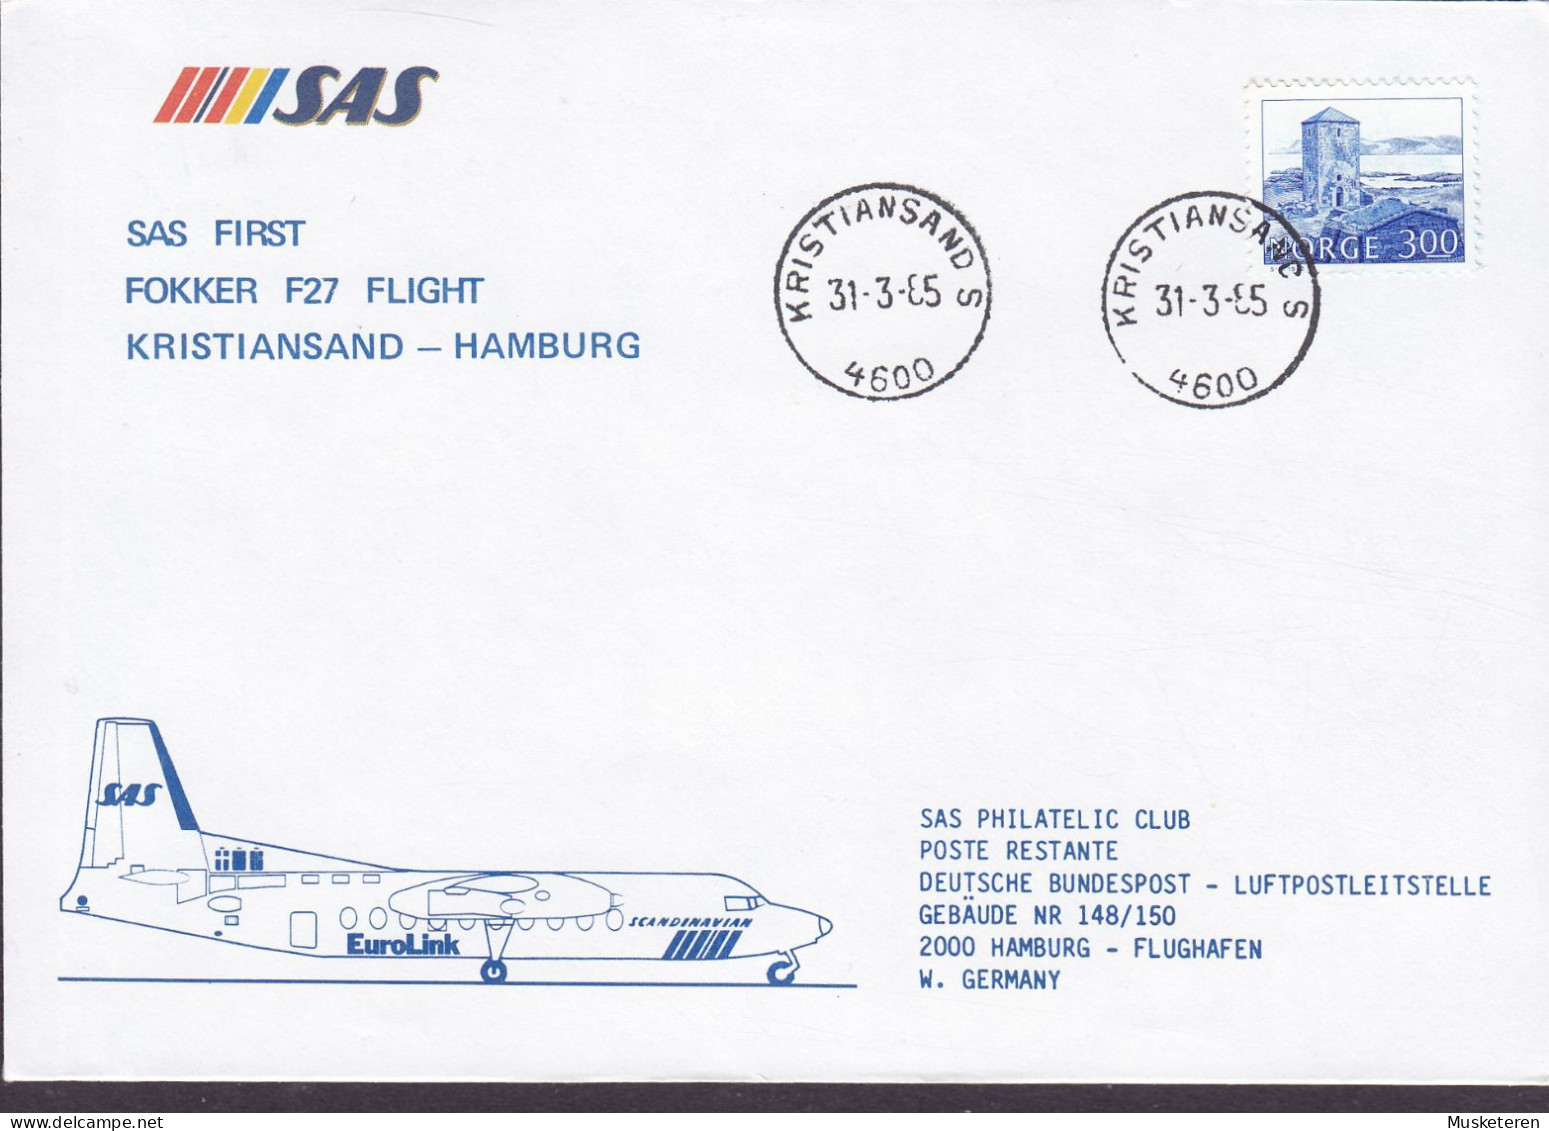 Norway SAS First Fokker F27 Flight KRISTIANSAND-HAMBURG 1985 Cover Brief Lettre Kloster Selje, Selja Stamp - Storia Postale